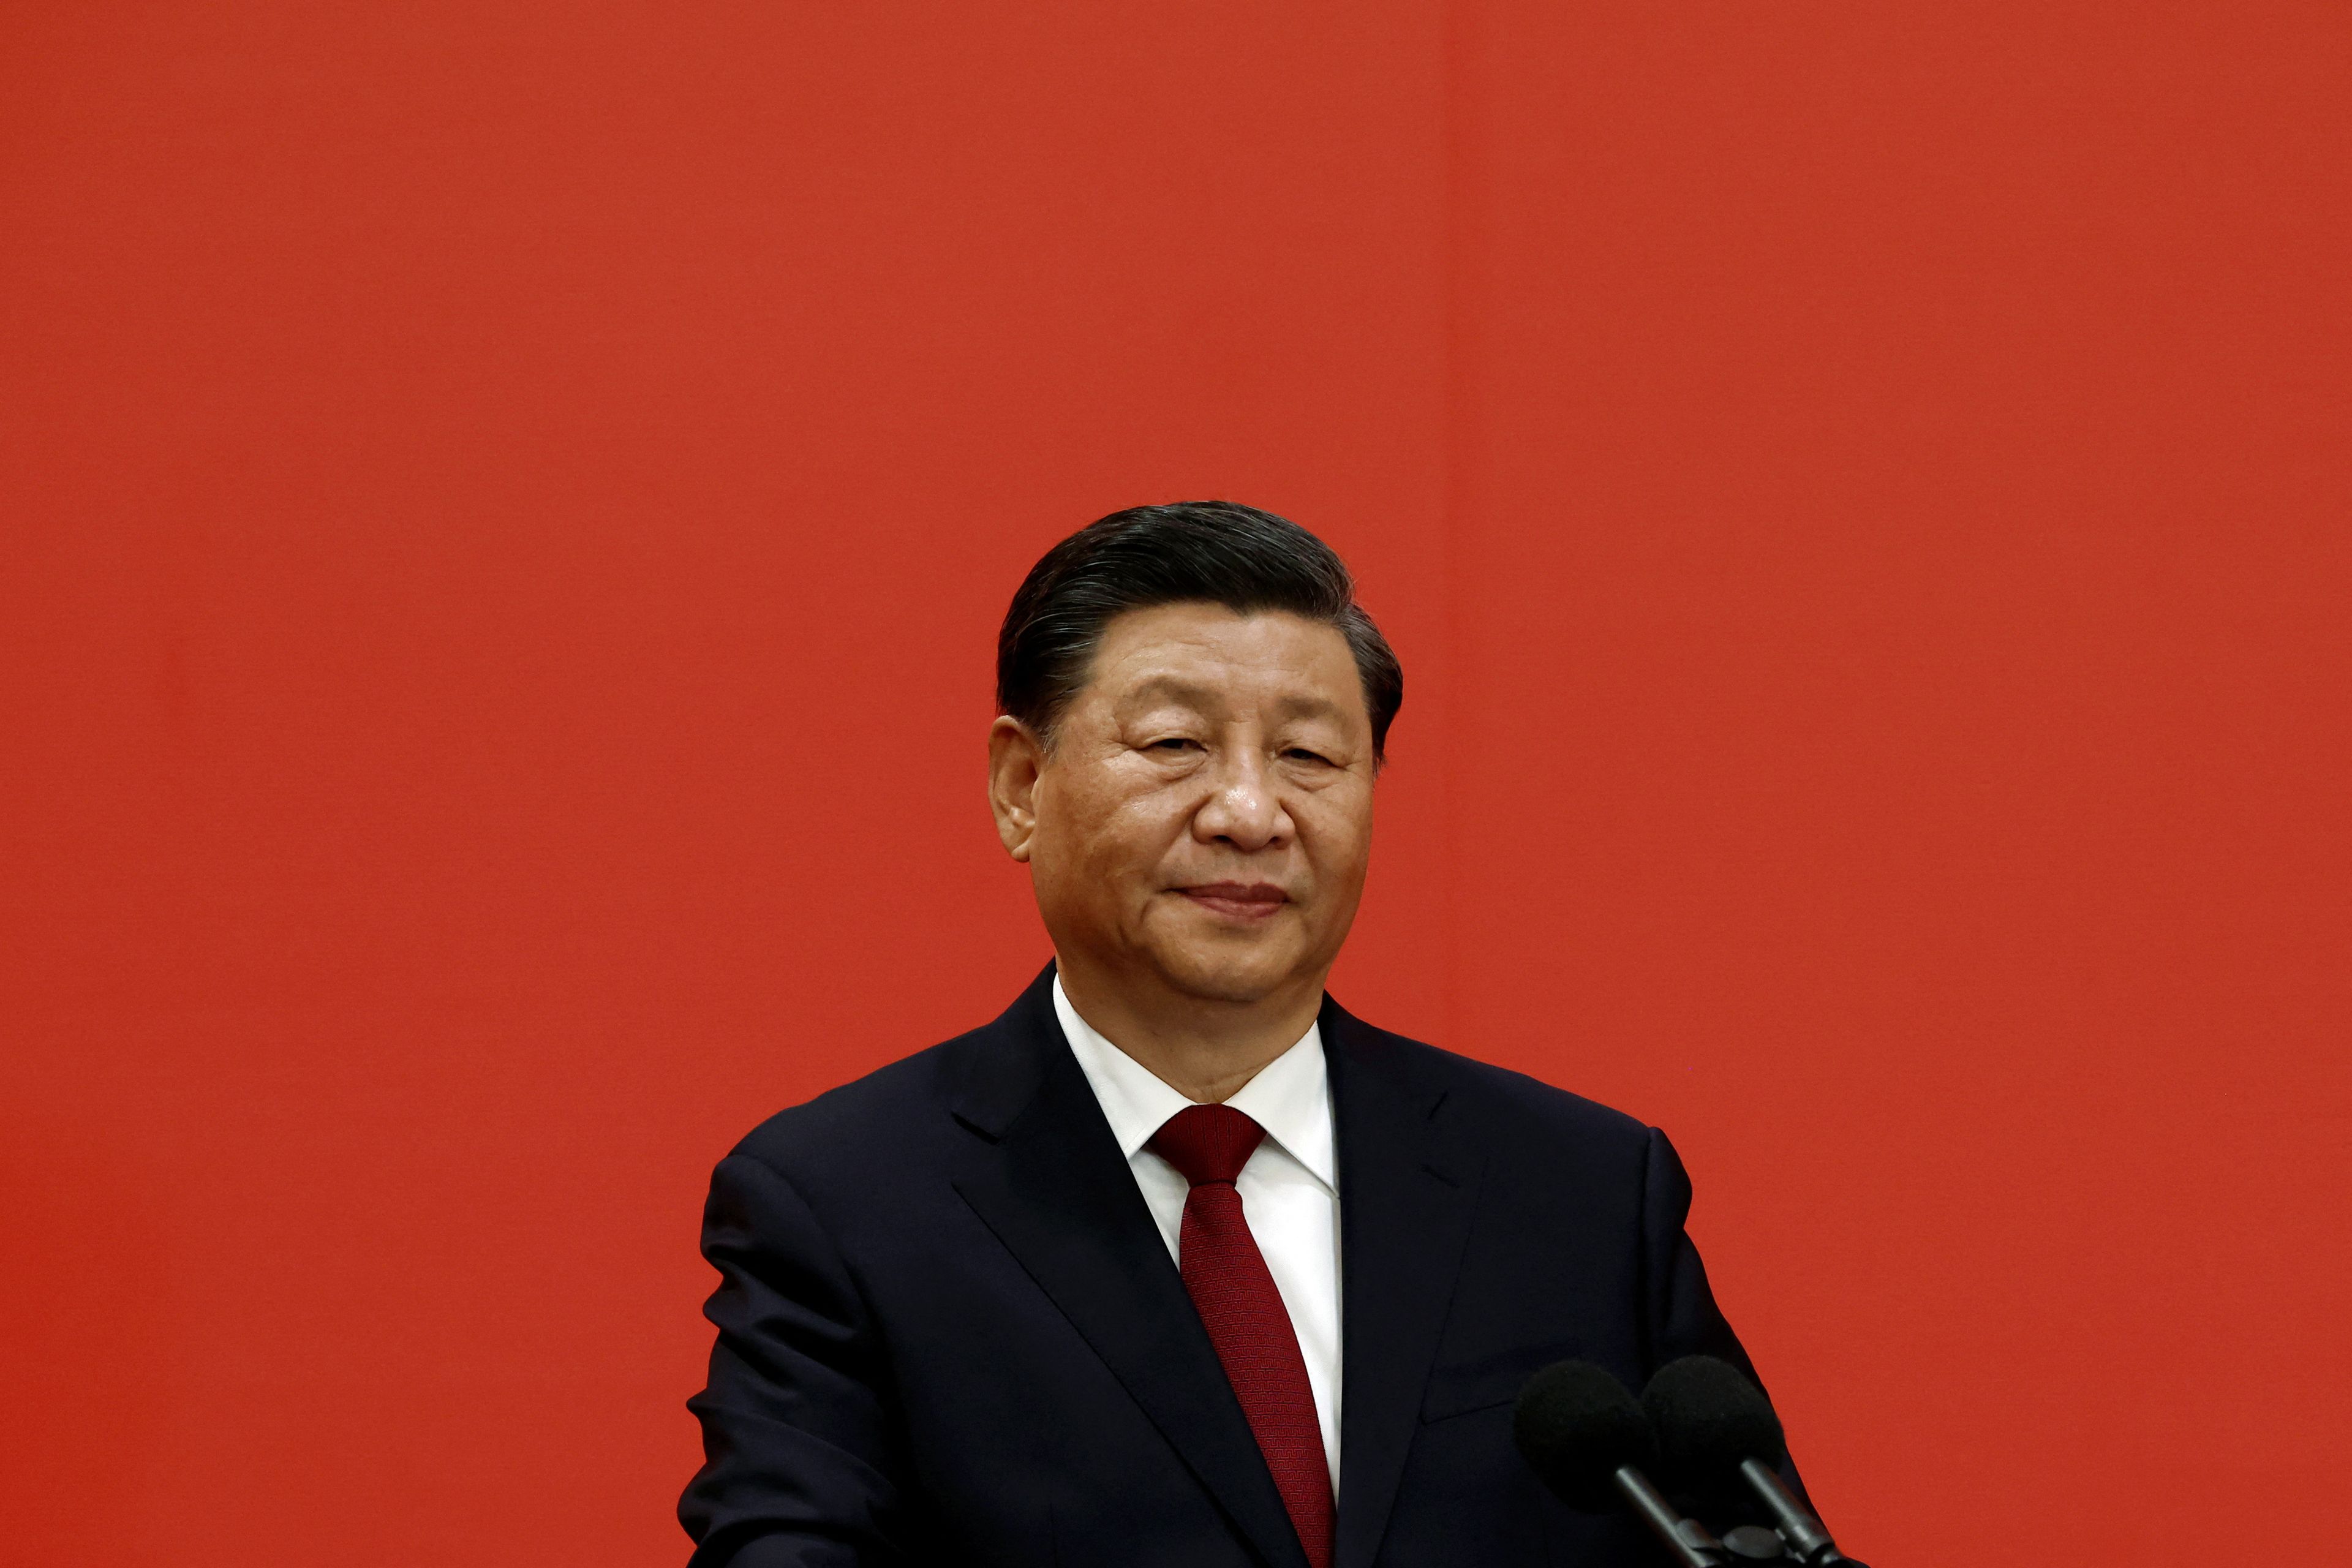 Xi Jinping ha sido reelegido este fin de semana para un tercer mandato en China con una cúpula de poder reforzada con sus fieles.